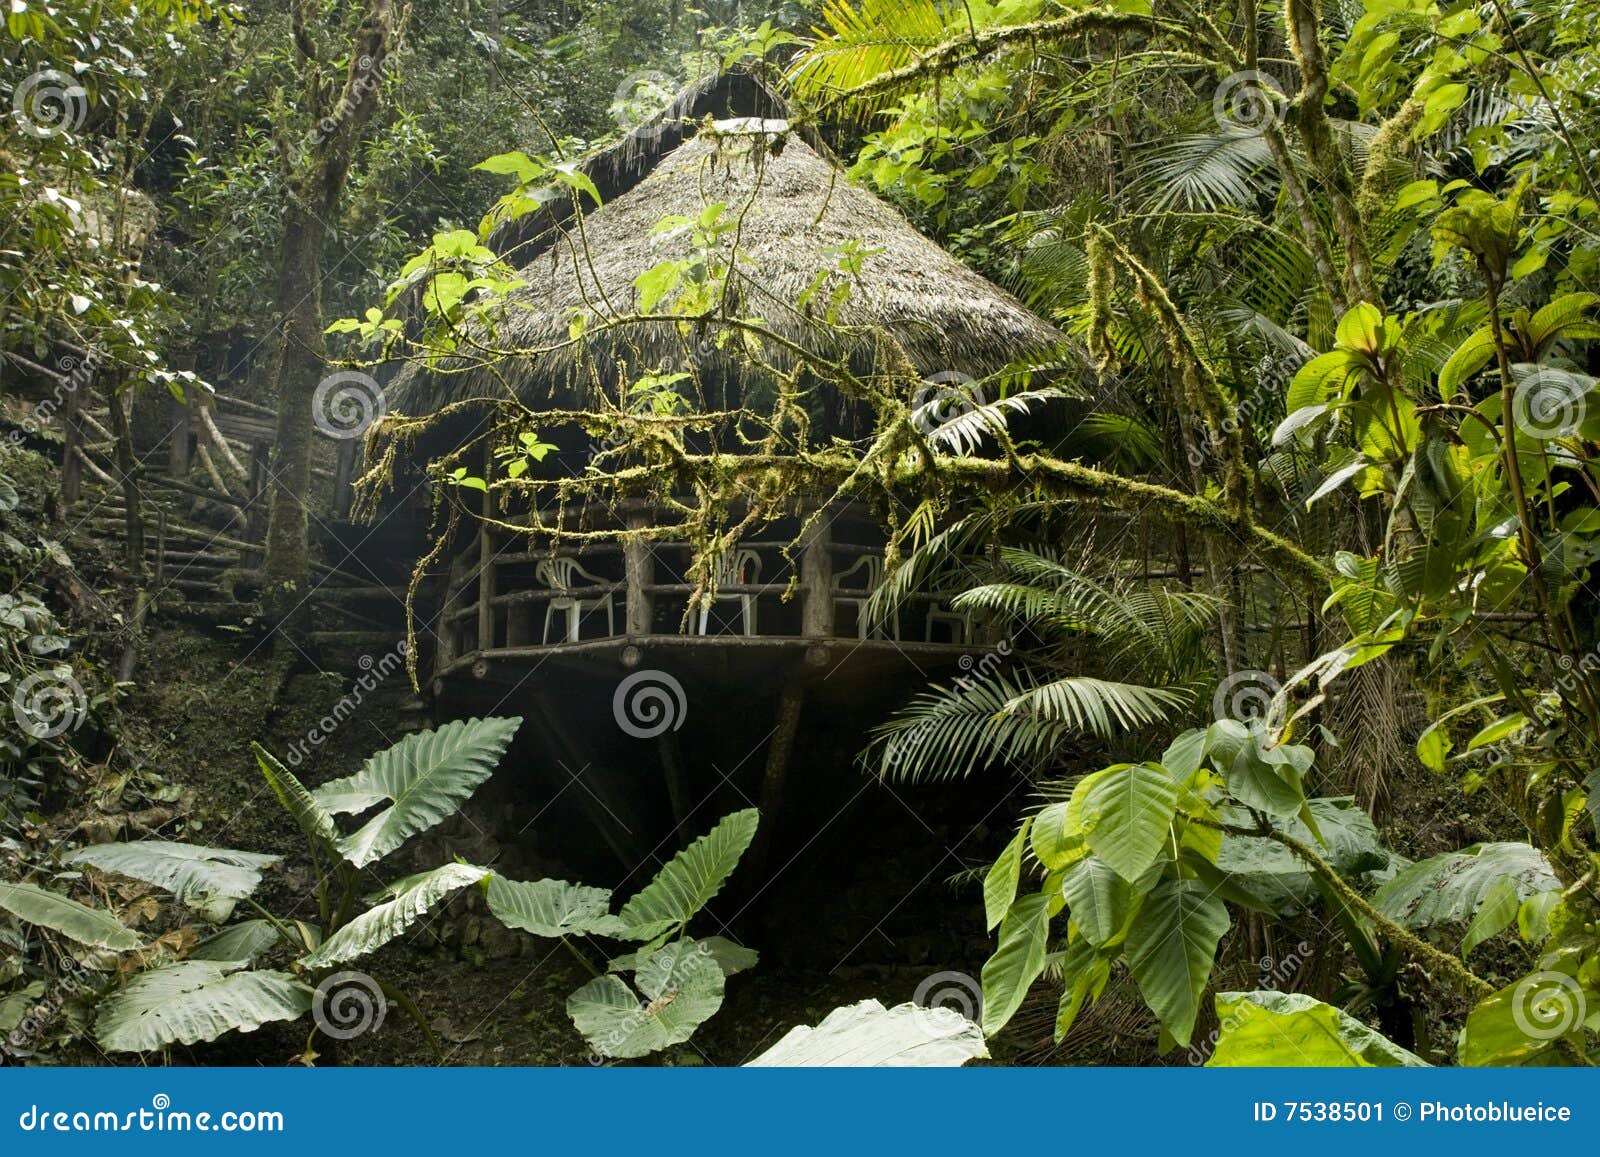 cabana in the ecuadorian cloudforest